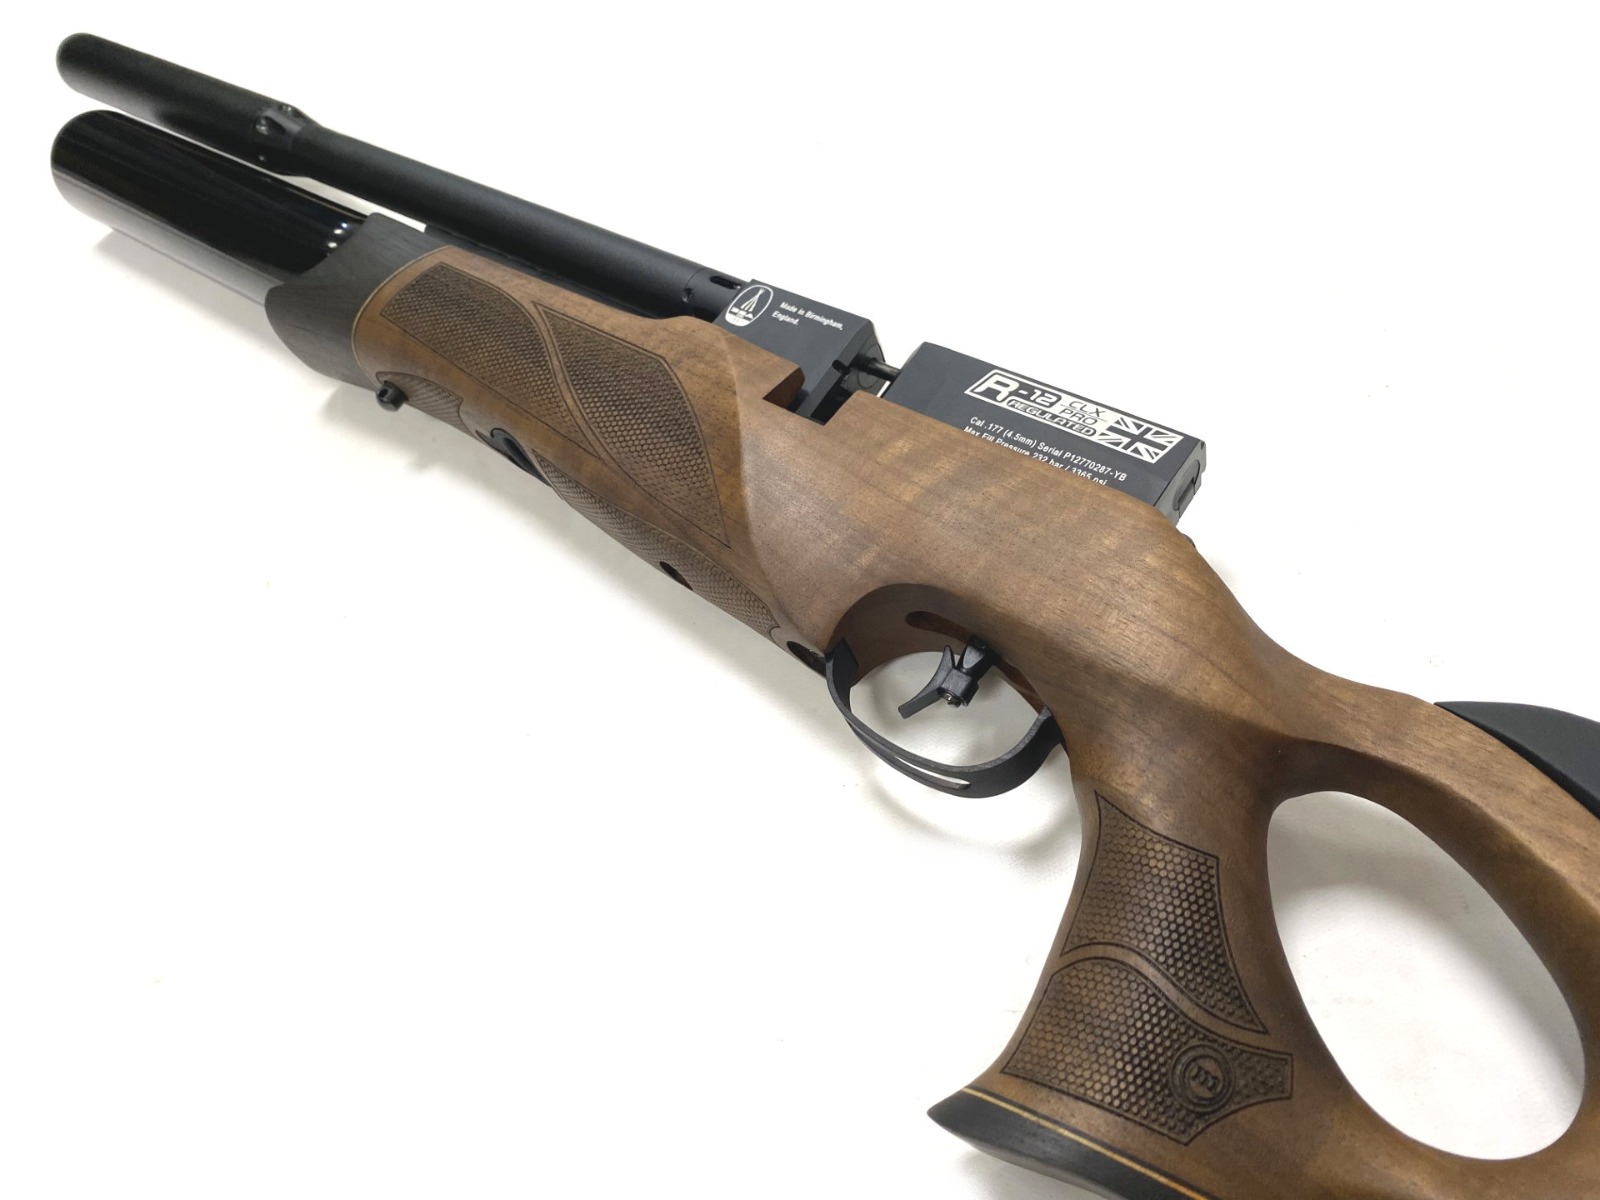 BSA R12 CLX Pro Walnut Super Carbine .177 Air Rifle - 230718/001 Image 5